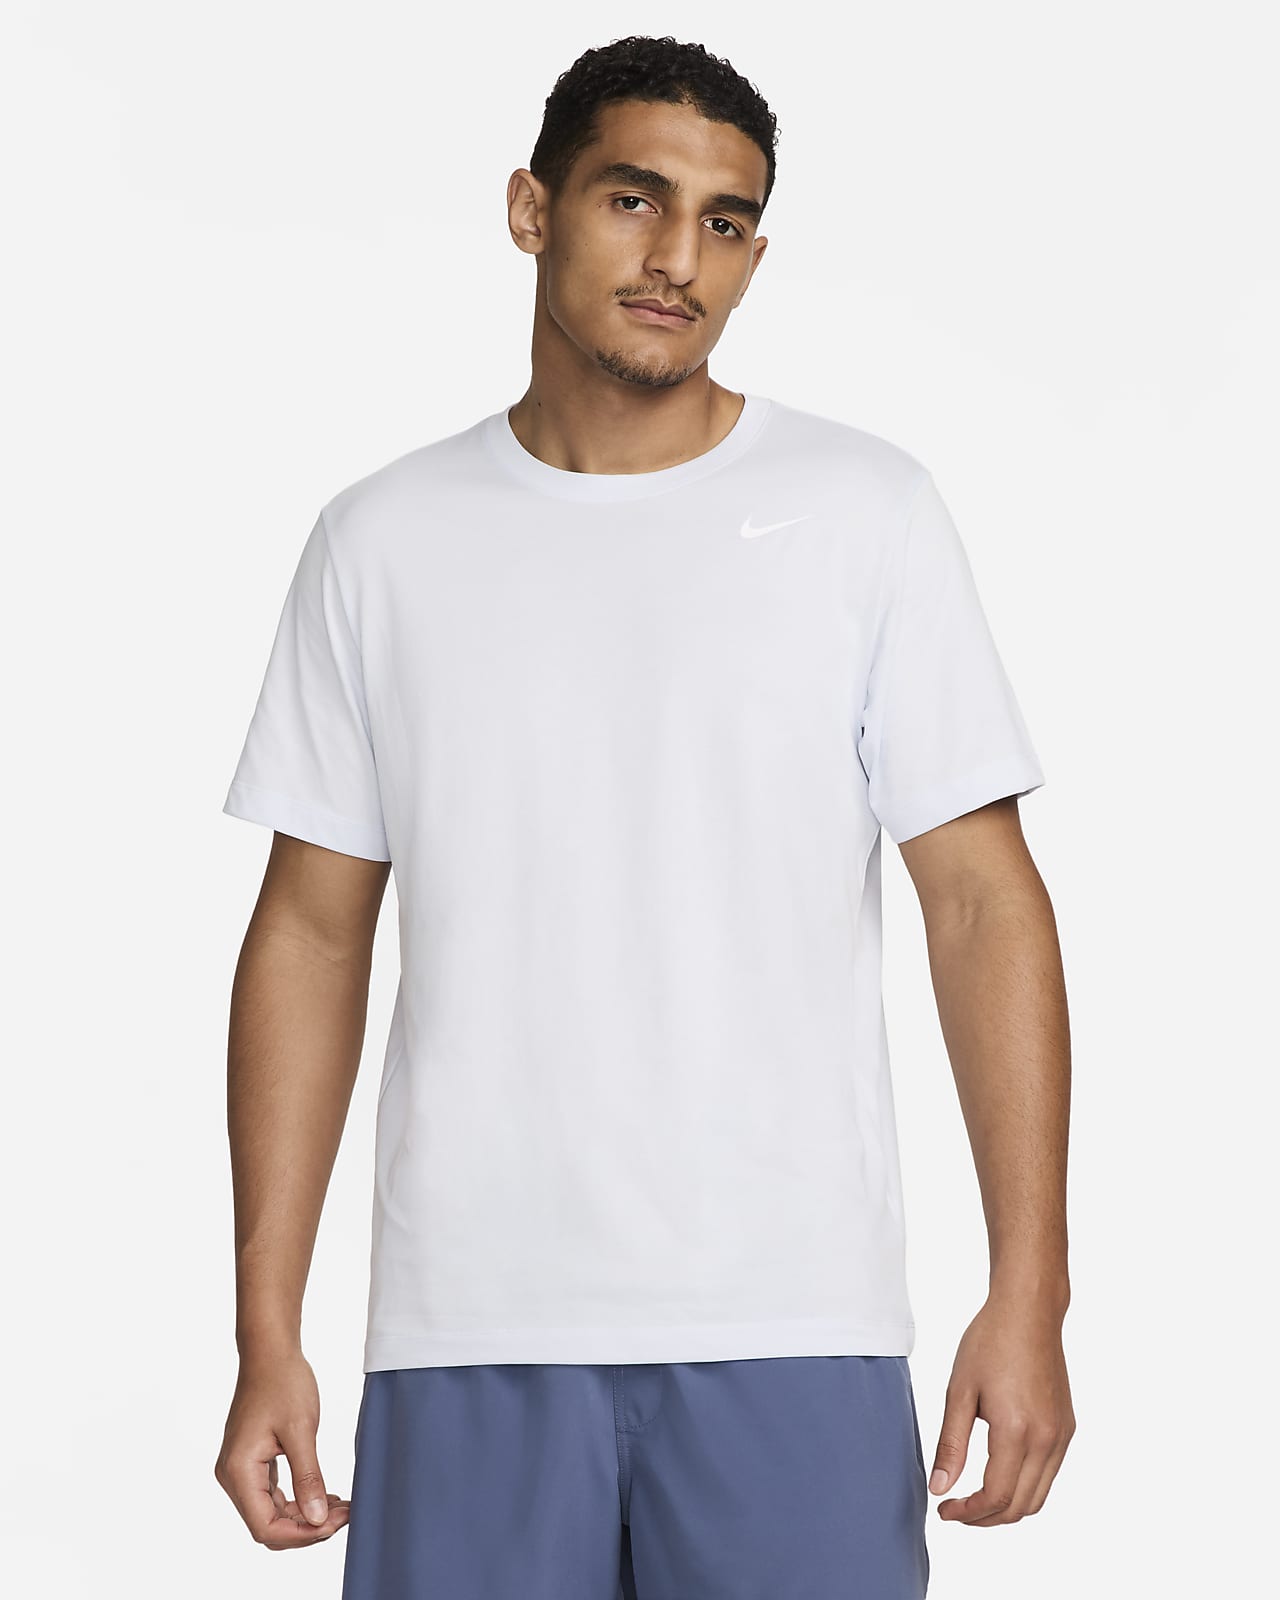  Nike Men's Dry Training Long Sleeve Shirt (as1, Alpha, s,  Regular, Regular, Laser Blue/Black) : Clothing, Shoes & Jewelry